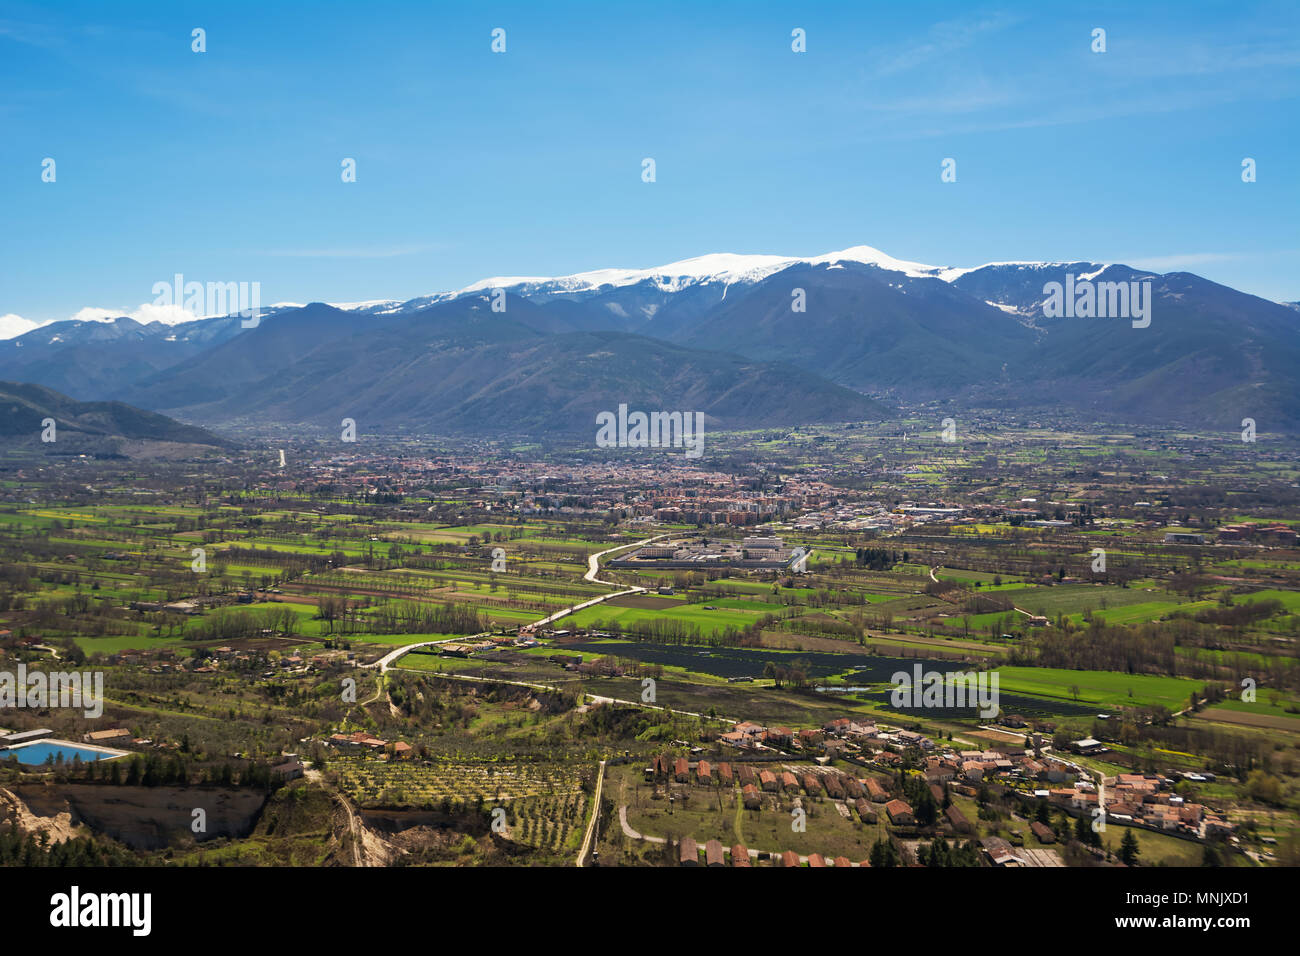 Sulmona im peligna Tal am Fuße des Berges Stockfoto